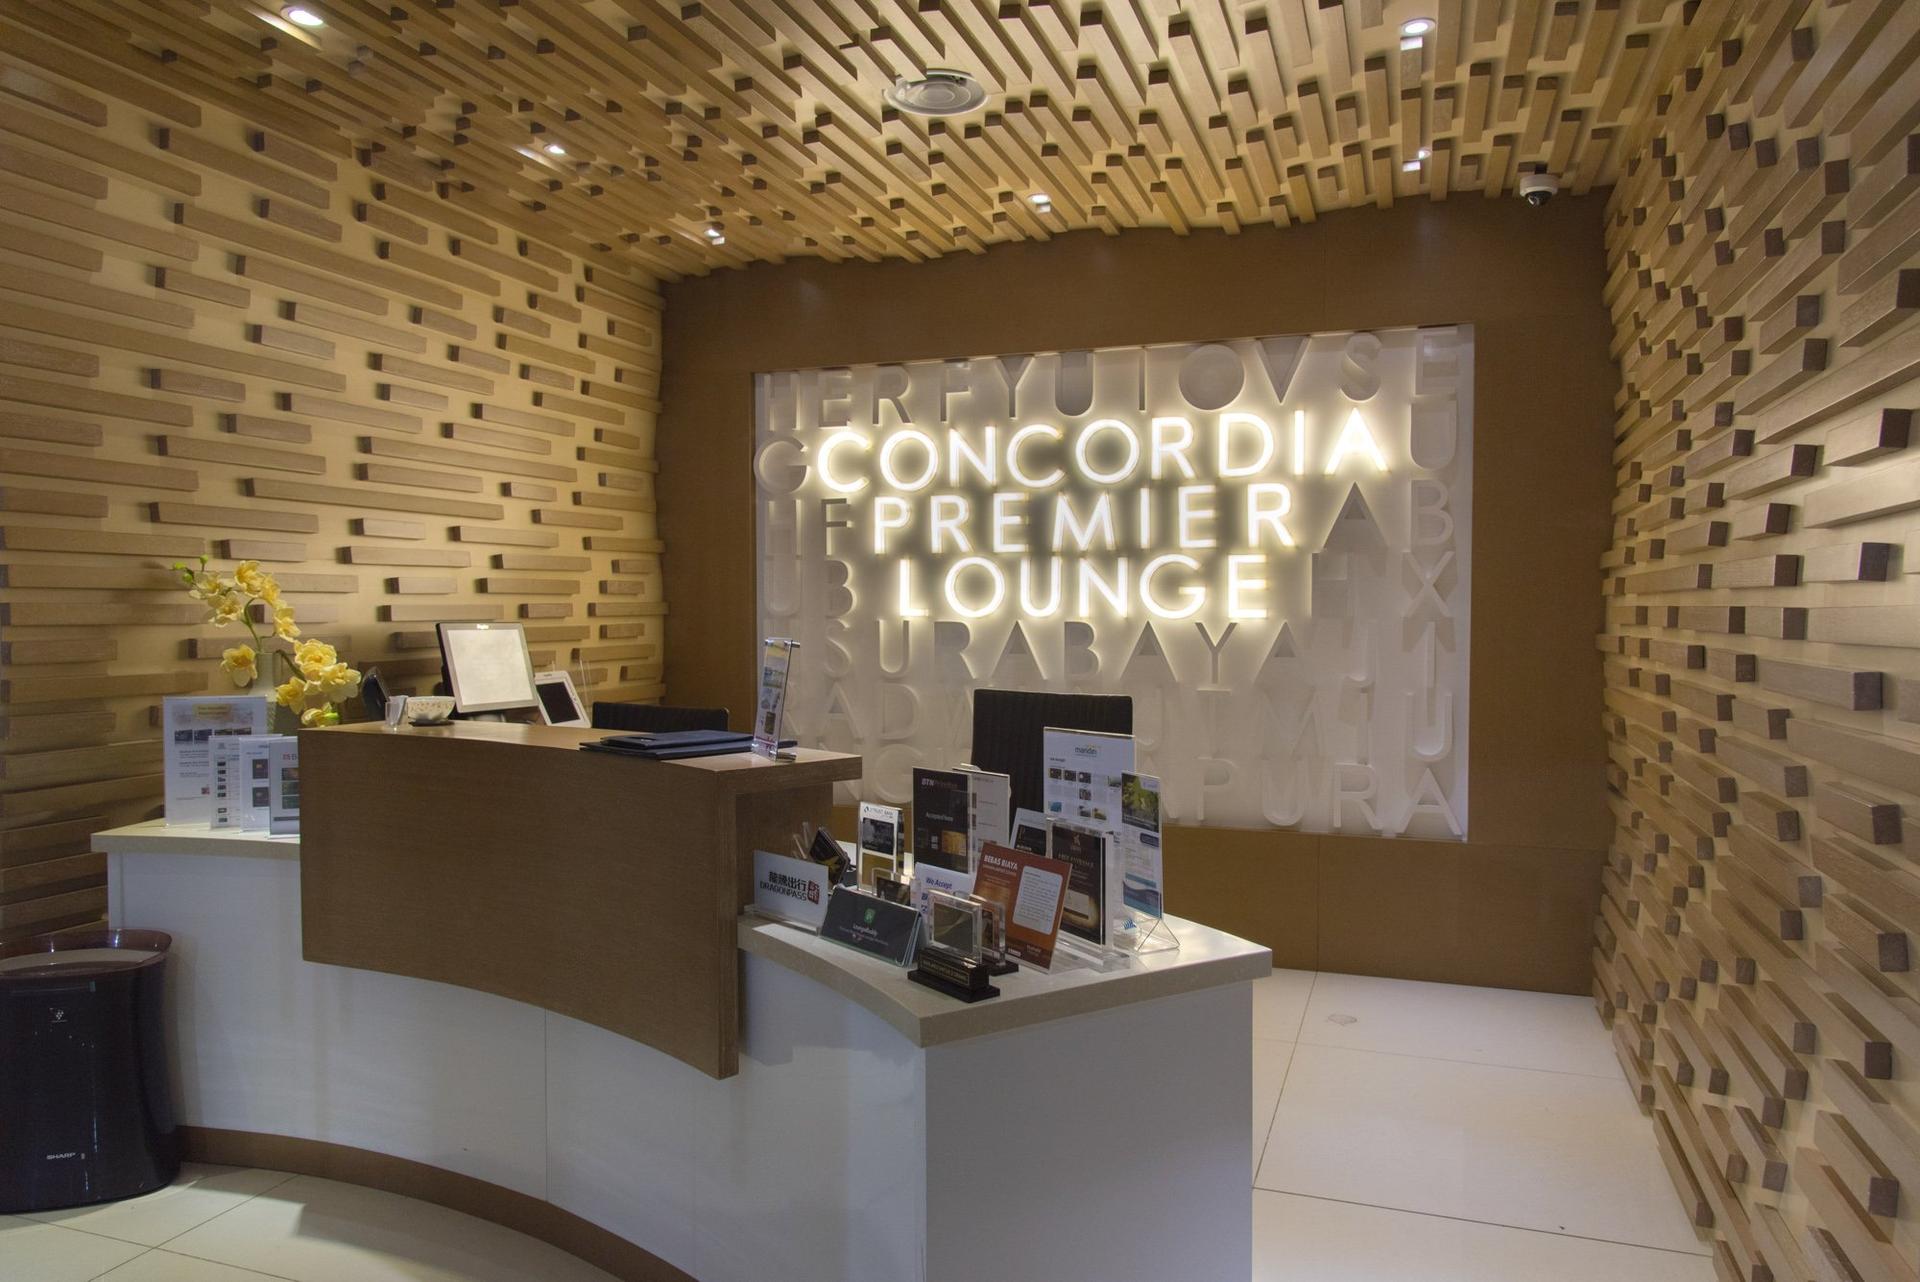 Concordia Premier Lounge image 50 of 81